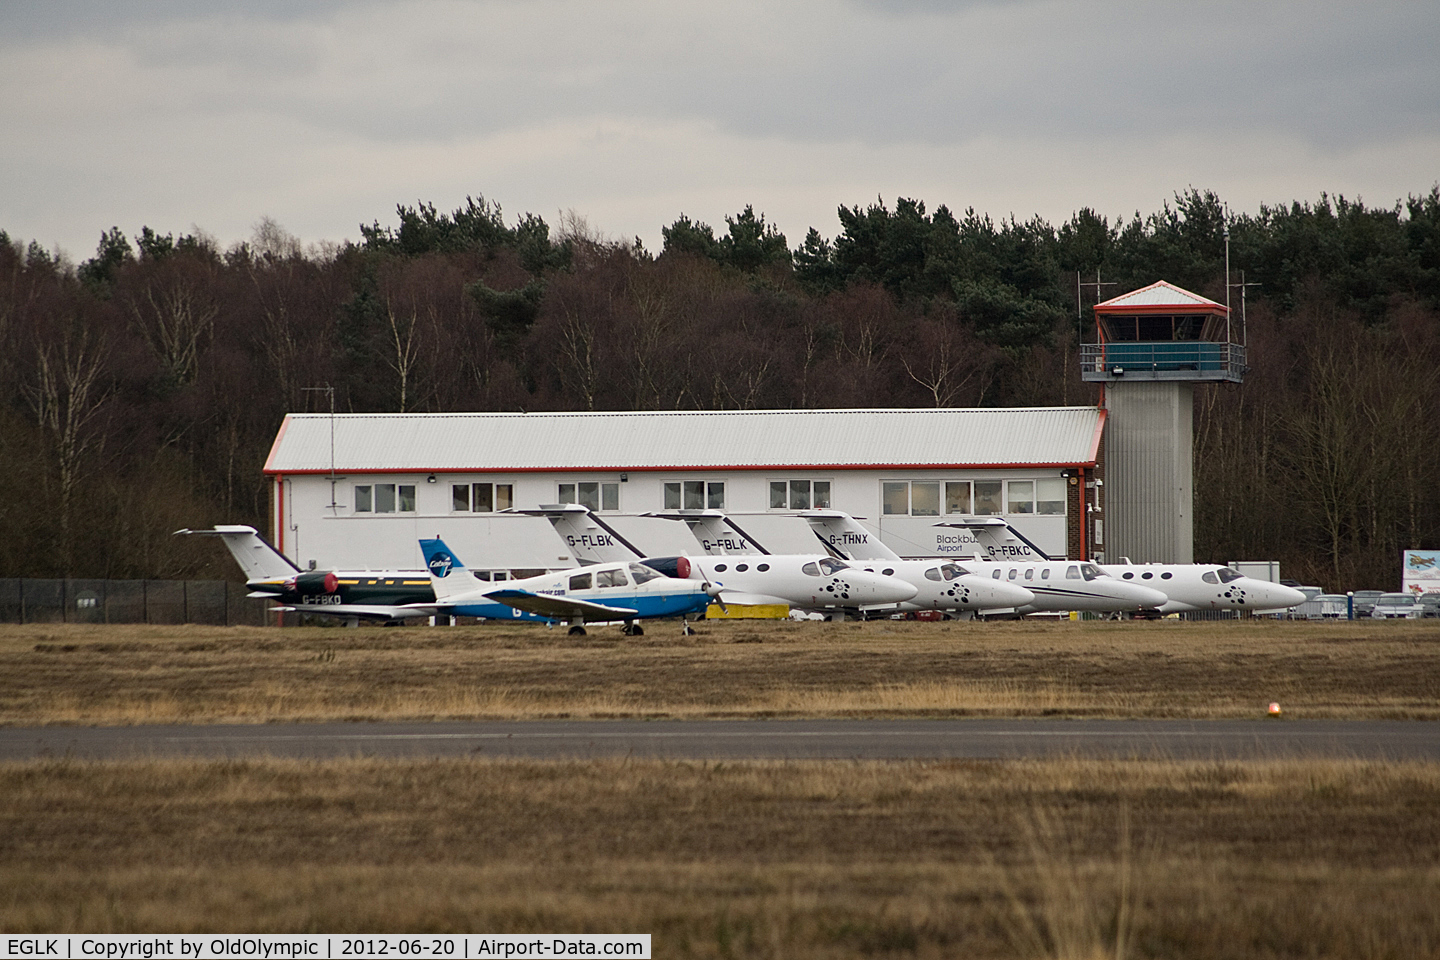 Blackbushe Airport, Camberley, England United Kingdom (EGLK) - Business aviation park